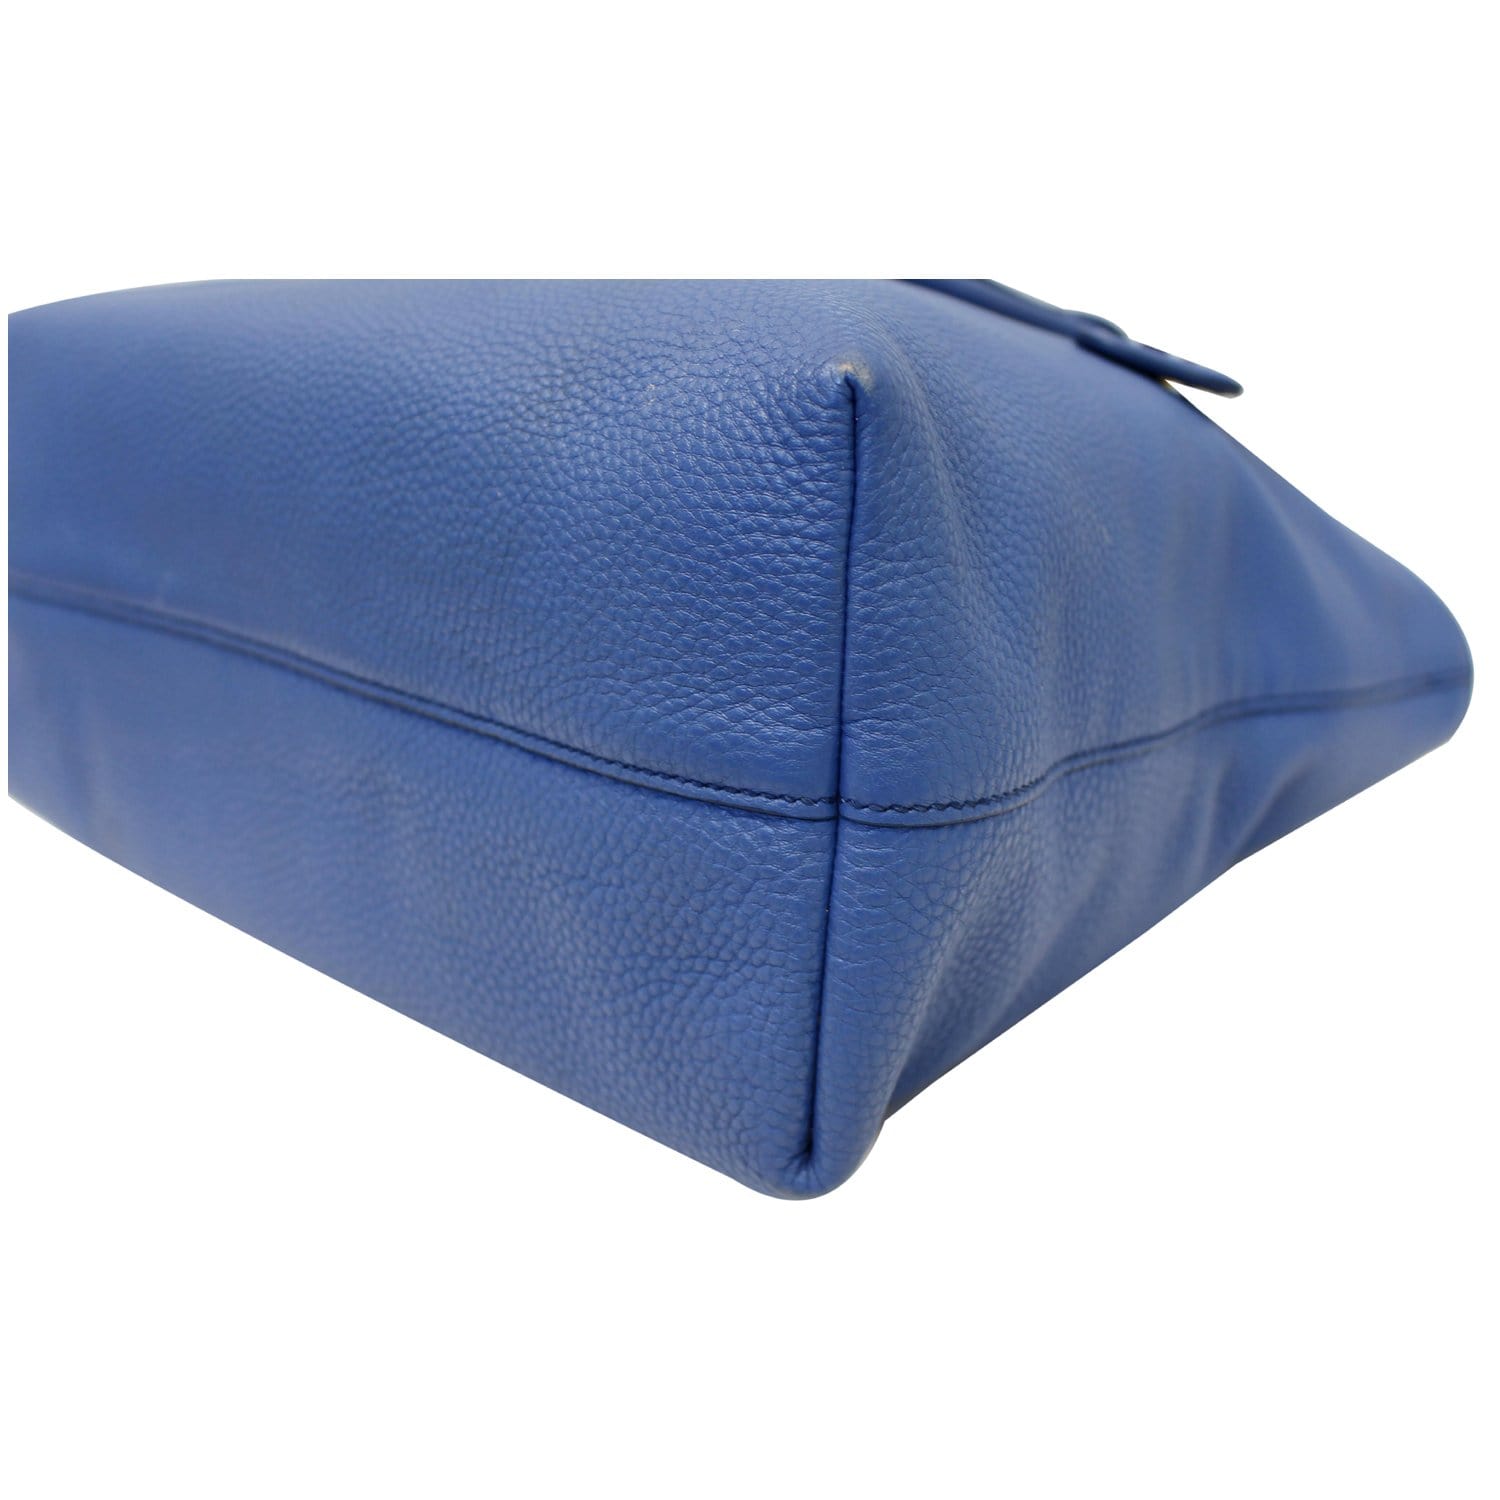 PRADA Vitello Phenix Leather Tote Bag Blue-US